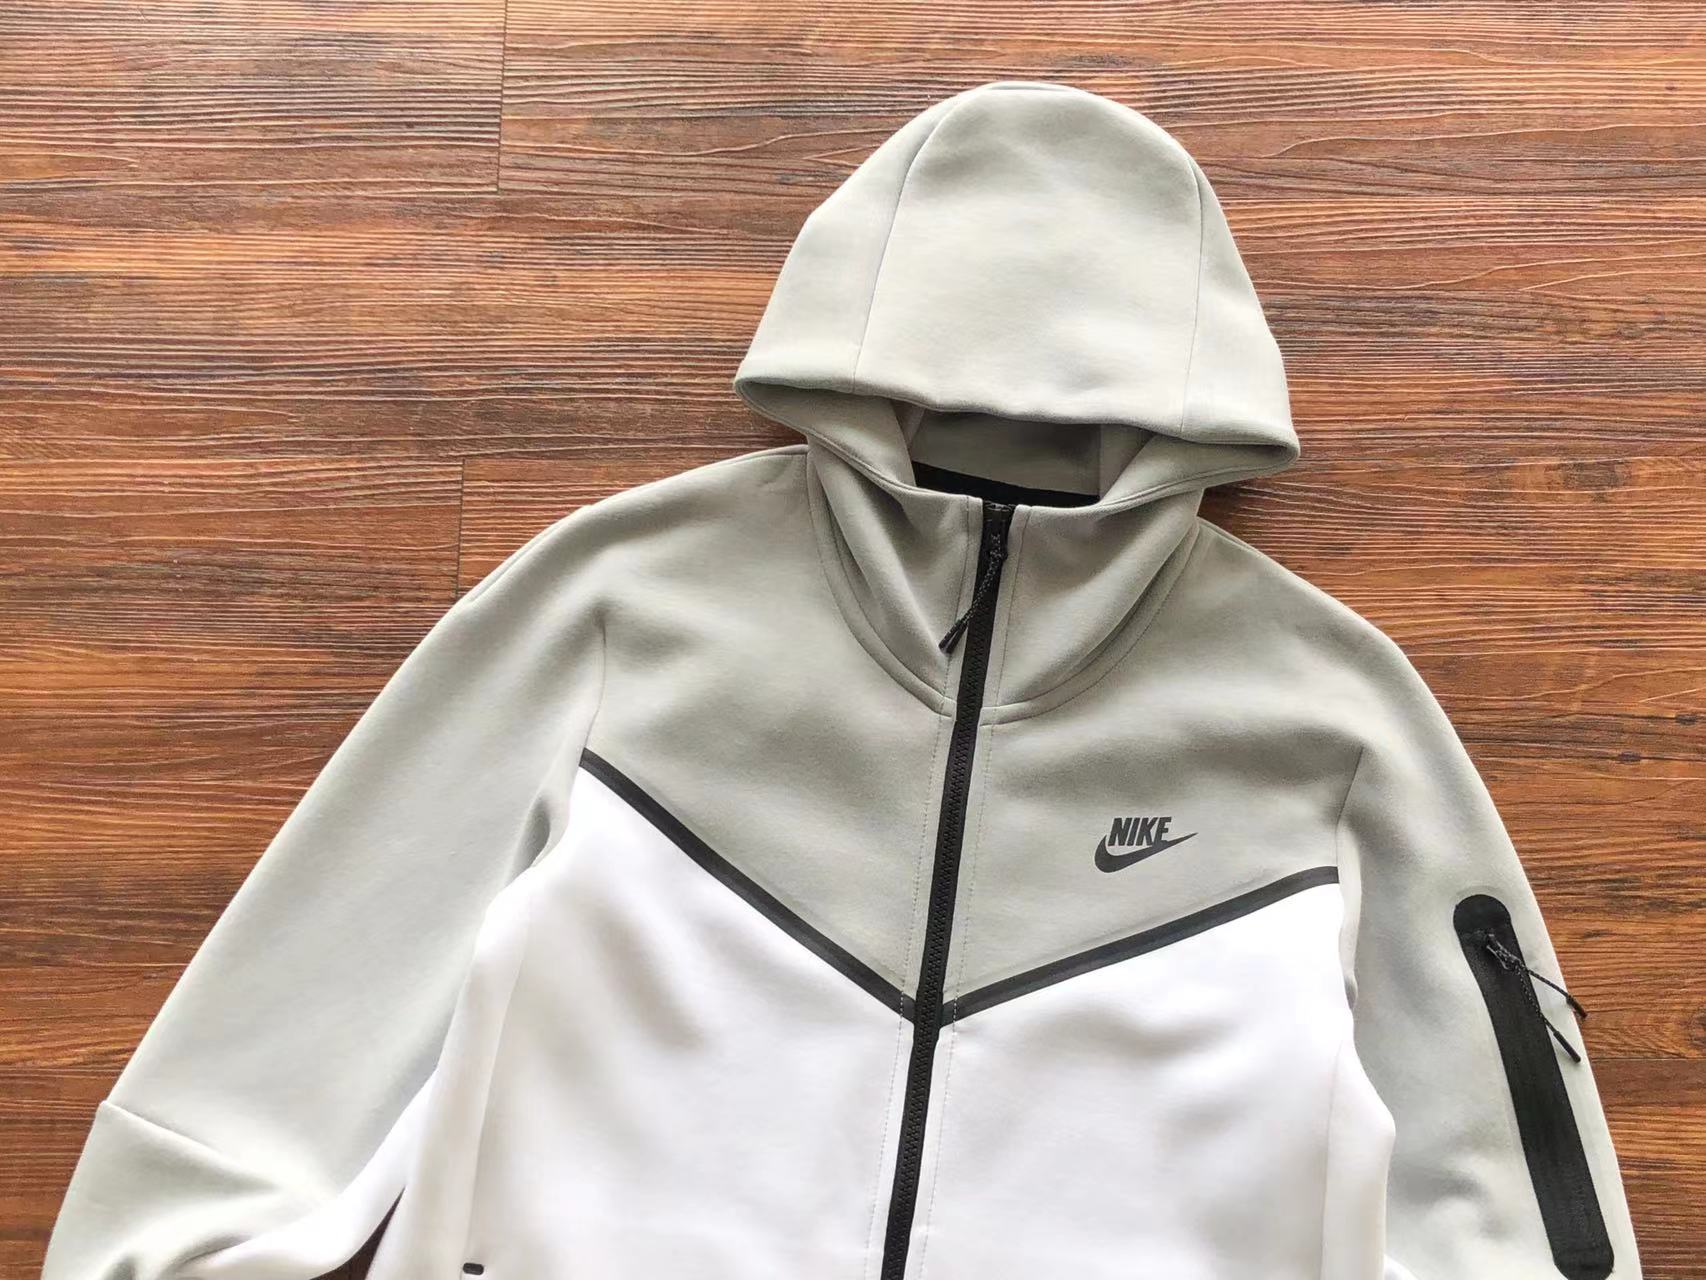 Nike Tech Fleece Branco/Cinza - Conforto e Estilo em um só Conjunto!